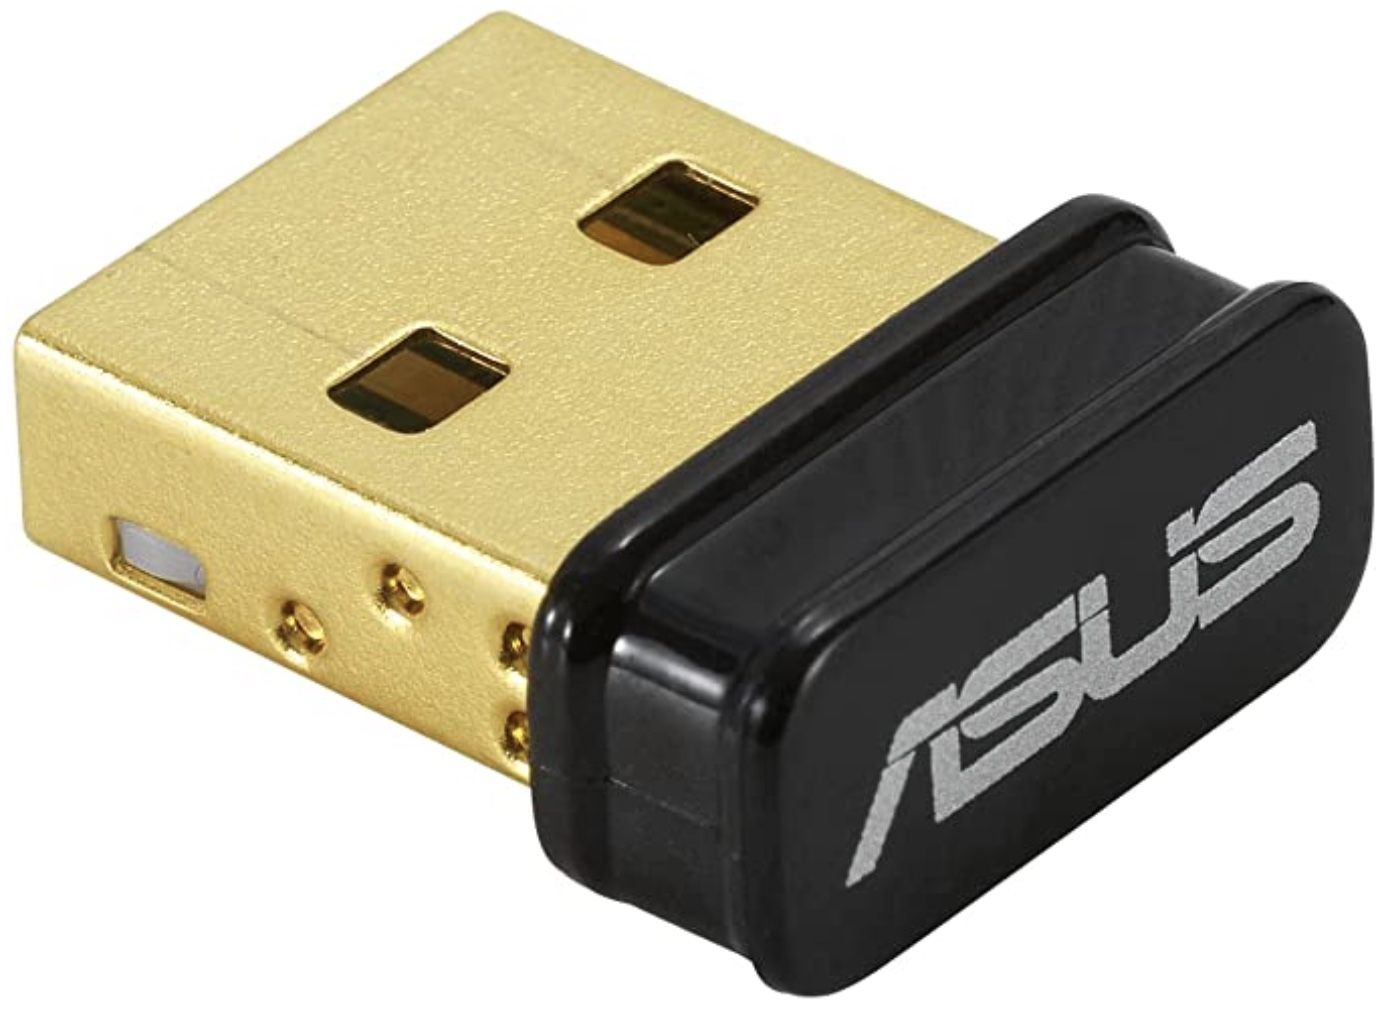 Asus USB BT500 Nano Bluetooth Stick für 8,99€ (statt 17€)   Prime